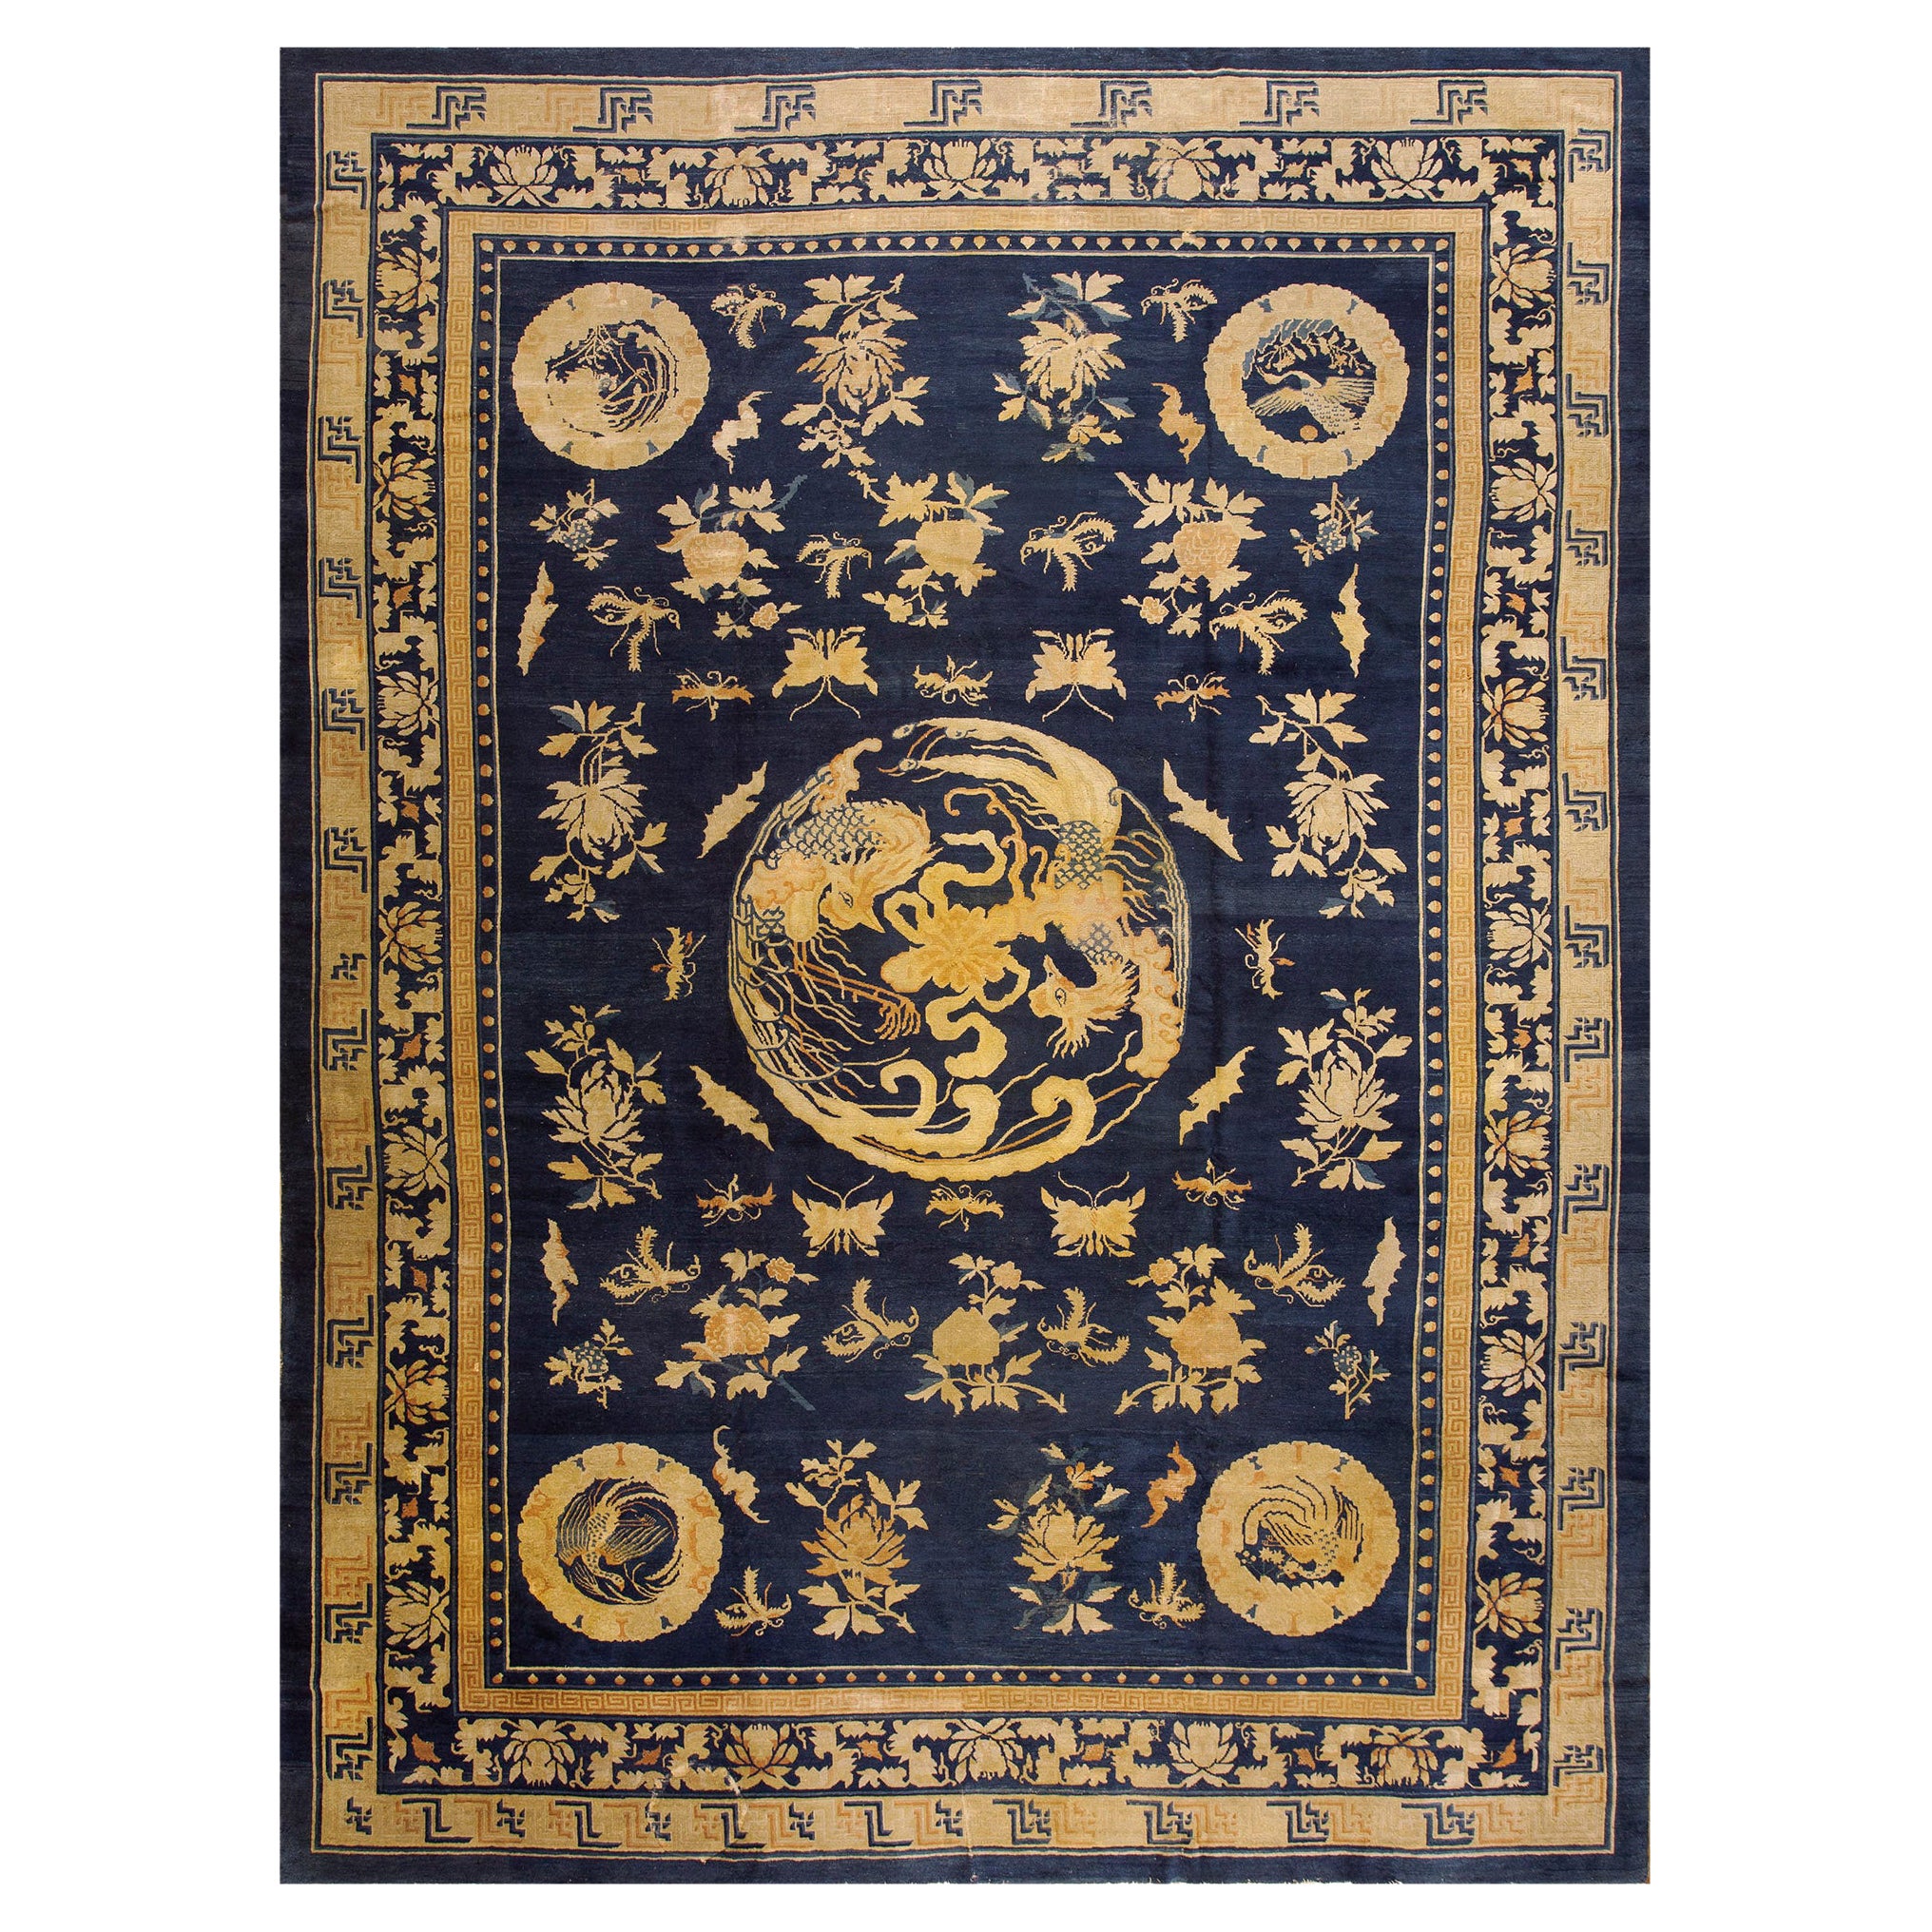 Late 19th Century Chinese Peking Carpet ( 10' 9''x 14' 3'' - 327 x 434 cm )